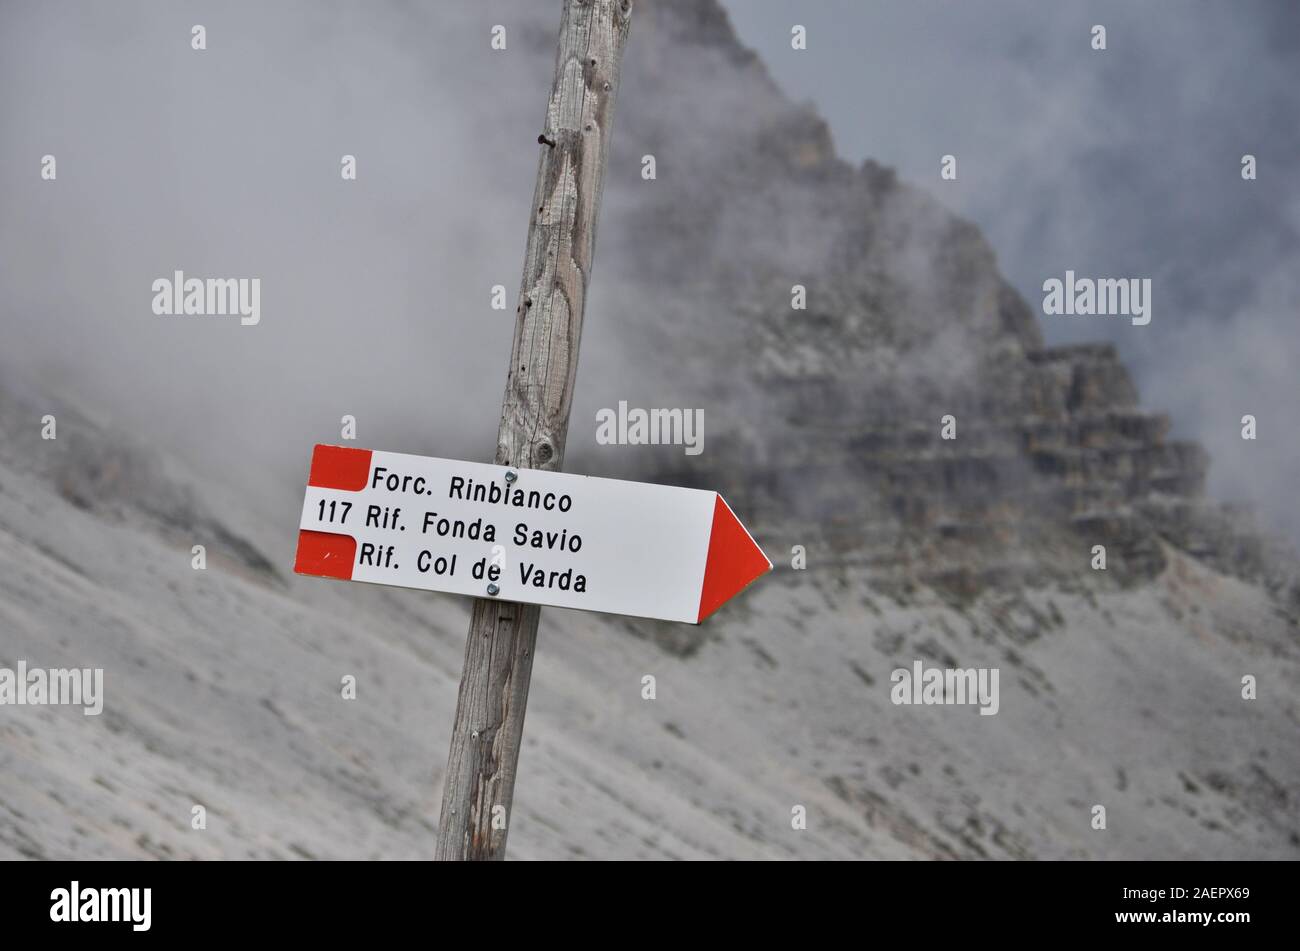 Indication of the paths near the Auronzo refuge, Dolomites Stock Photo